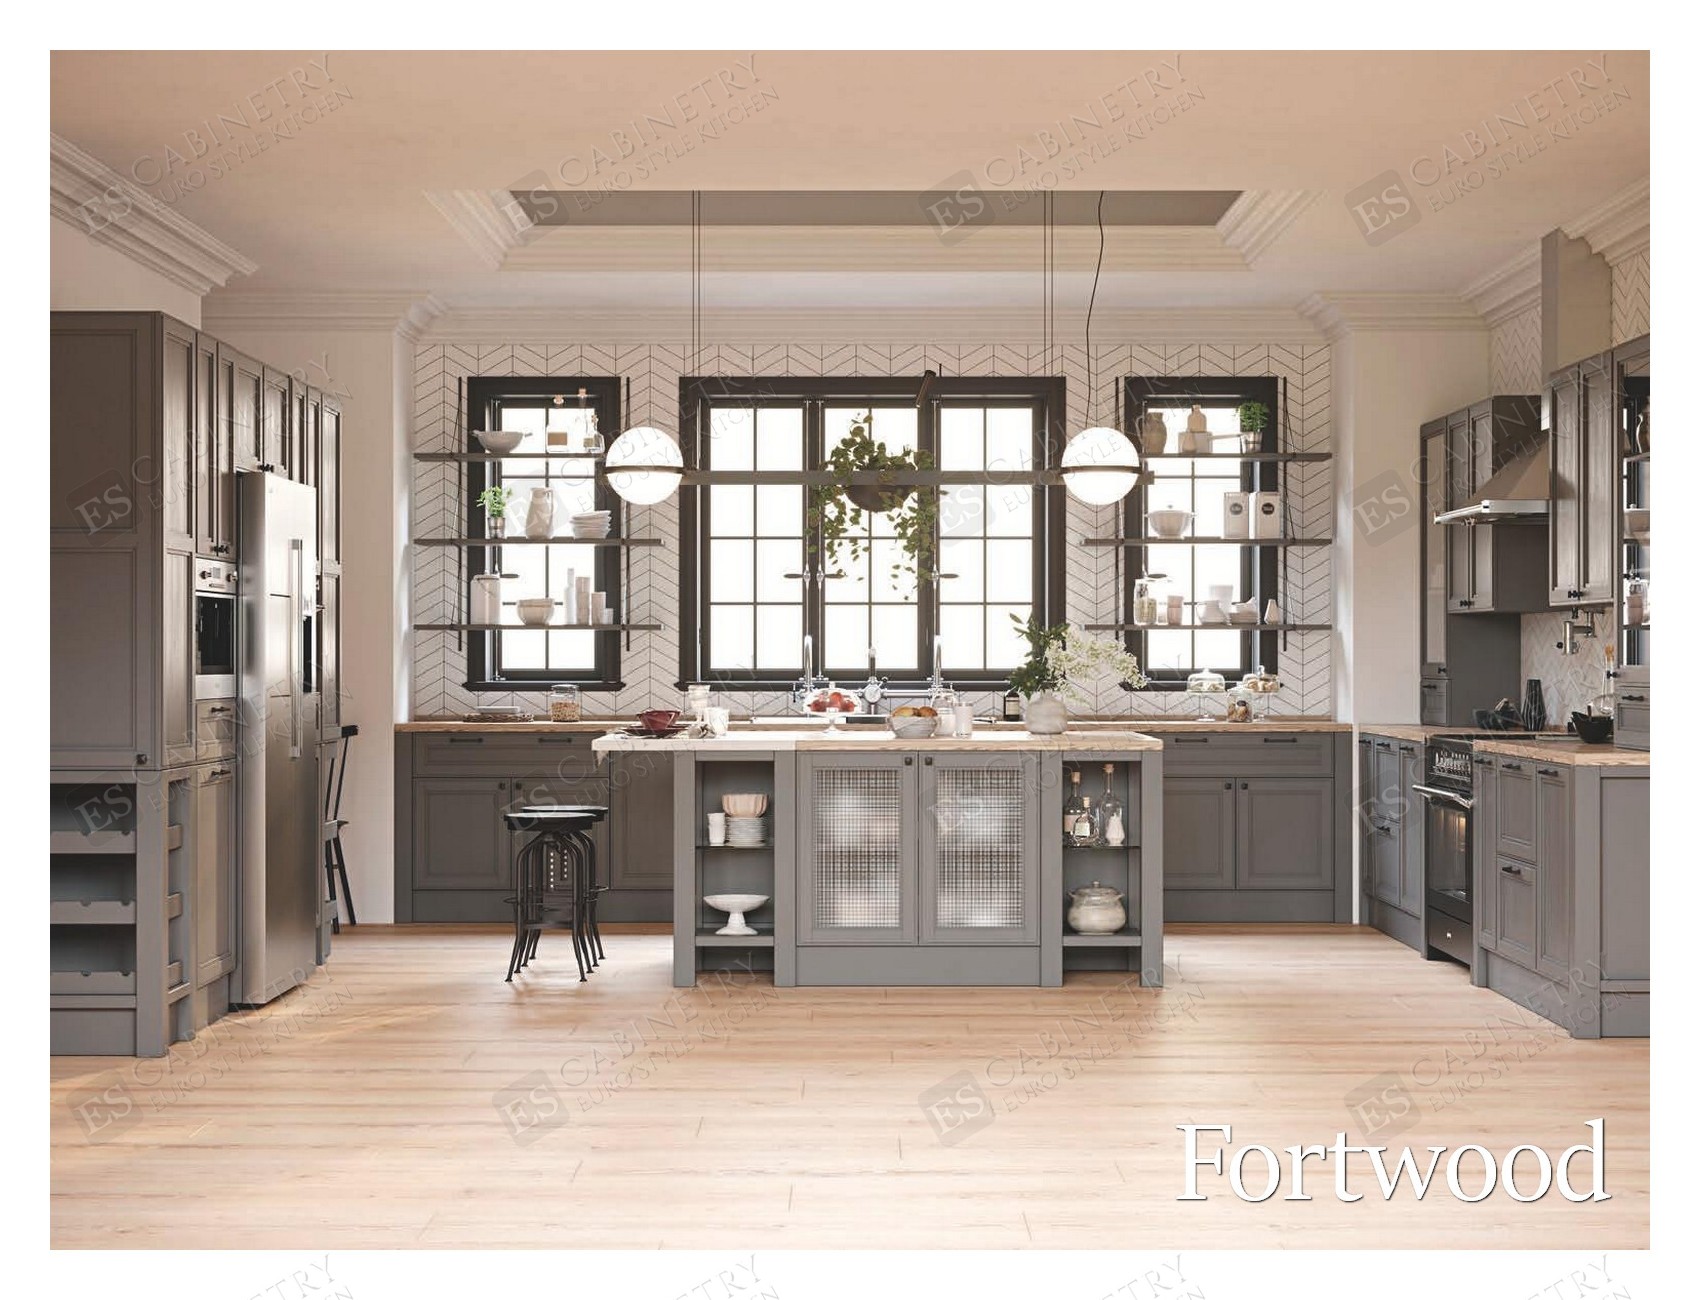 Fortwood | European design kitchen cabinets